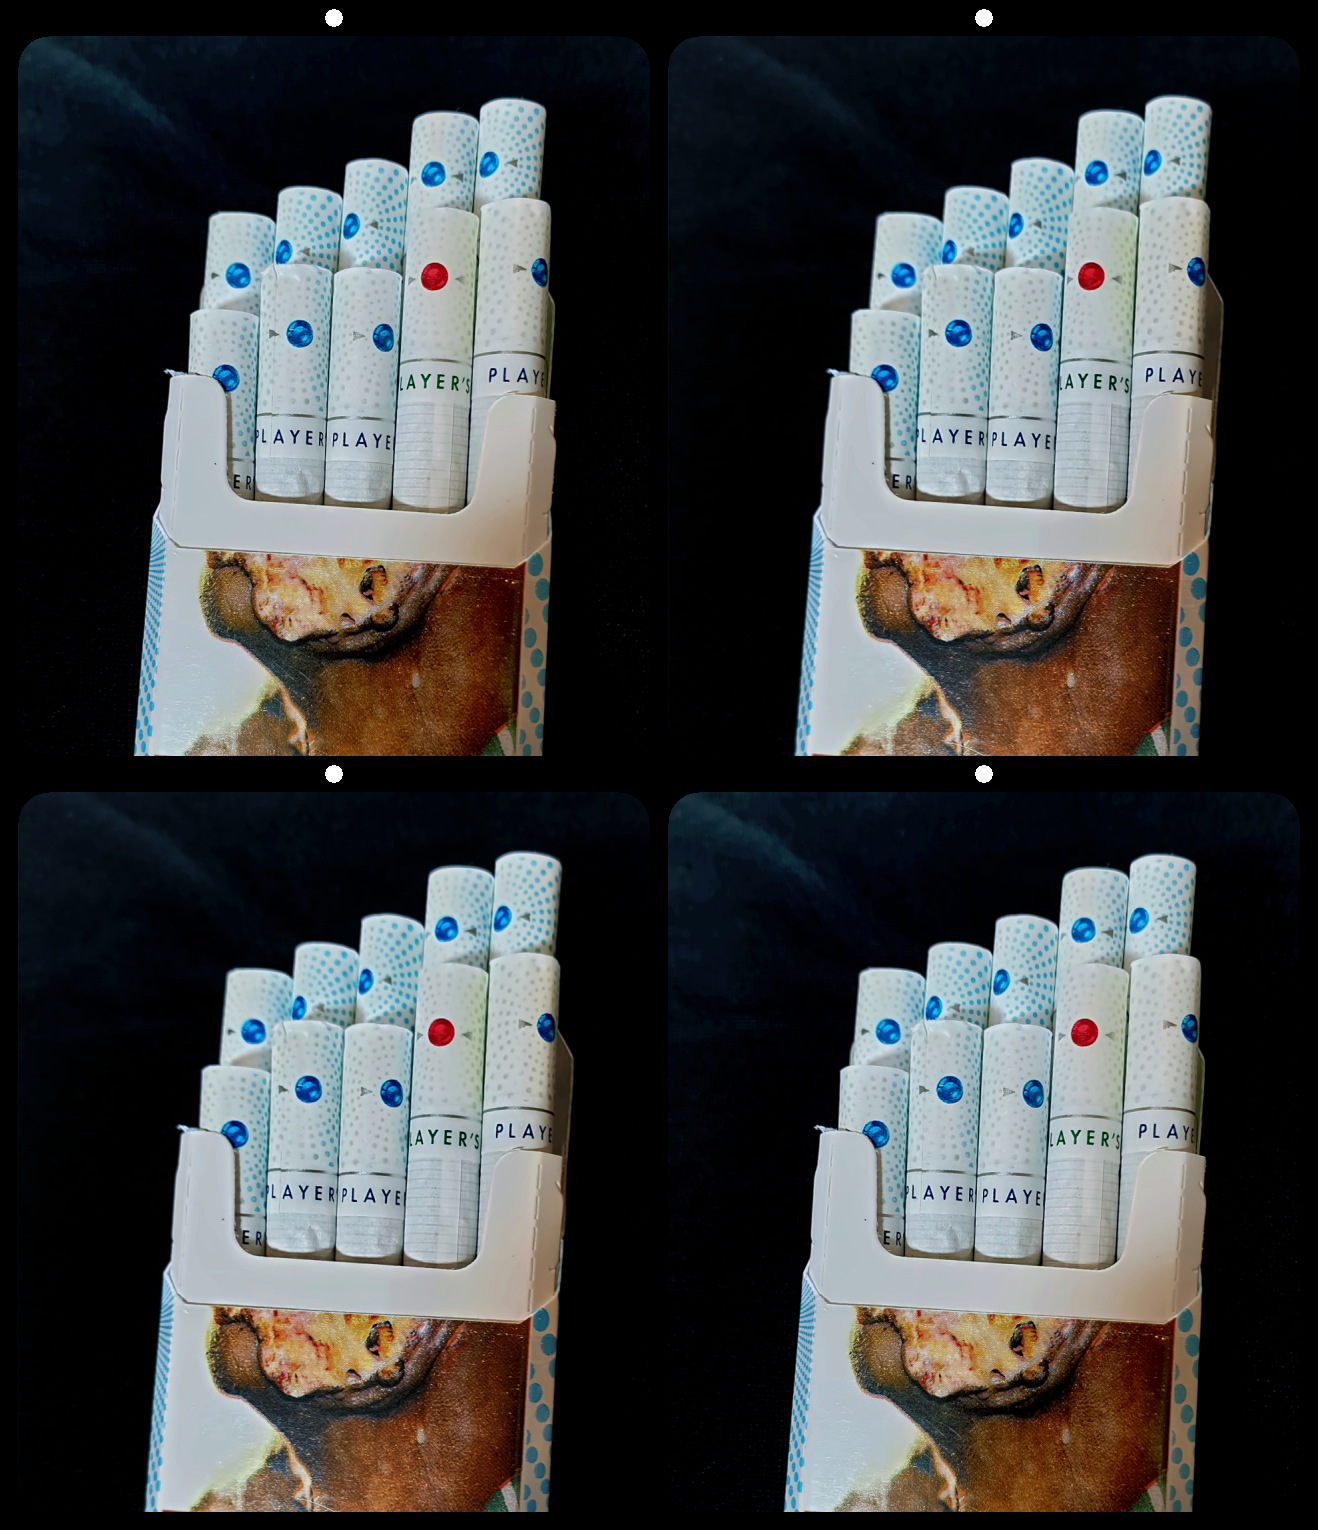 Flavoured Cigarettes by Dr V G Mohanan Nair, APSA, QPSA